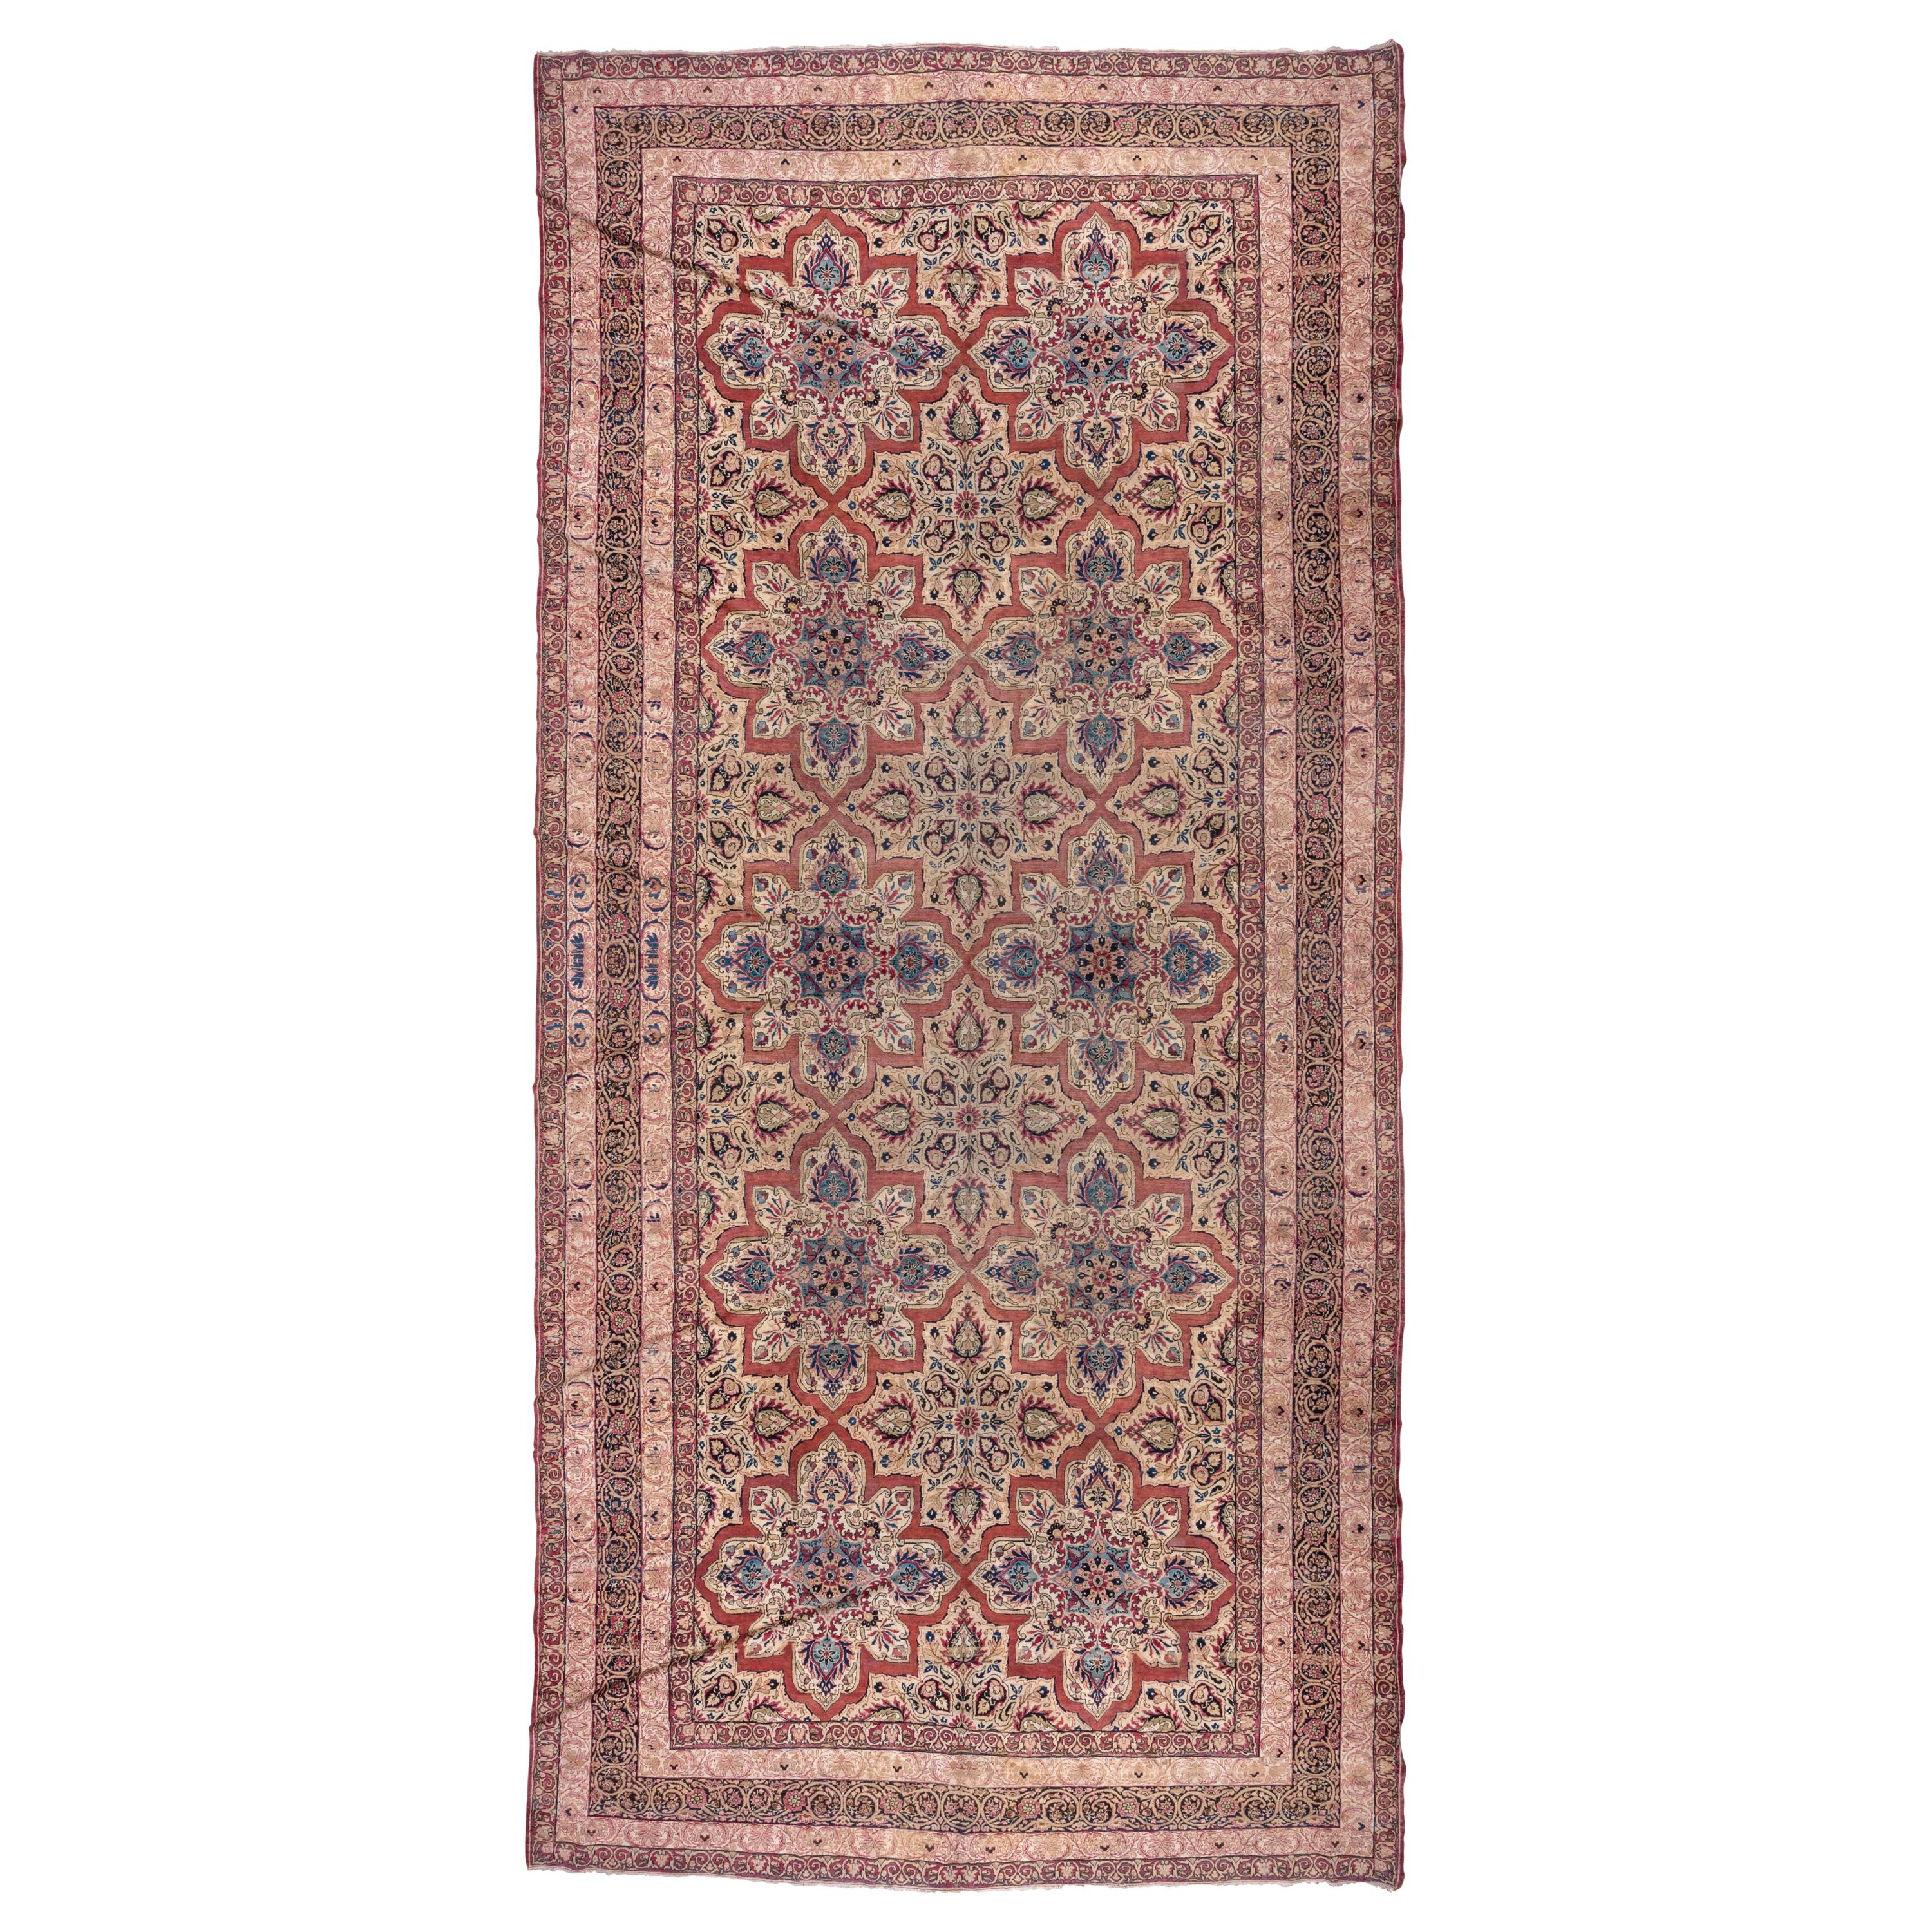 Antique Persian Kerman Gallery Carpet, circa 1890s